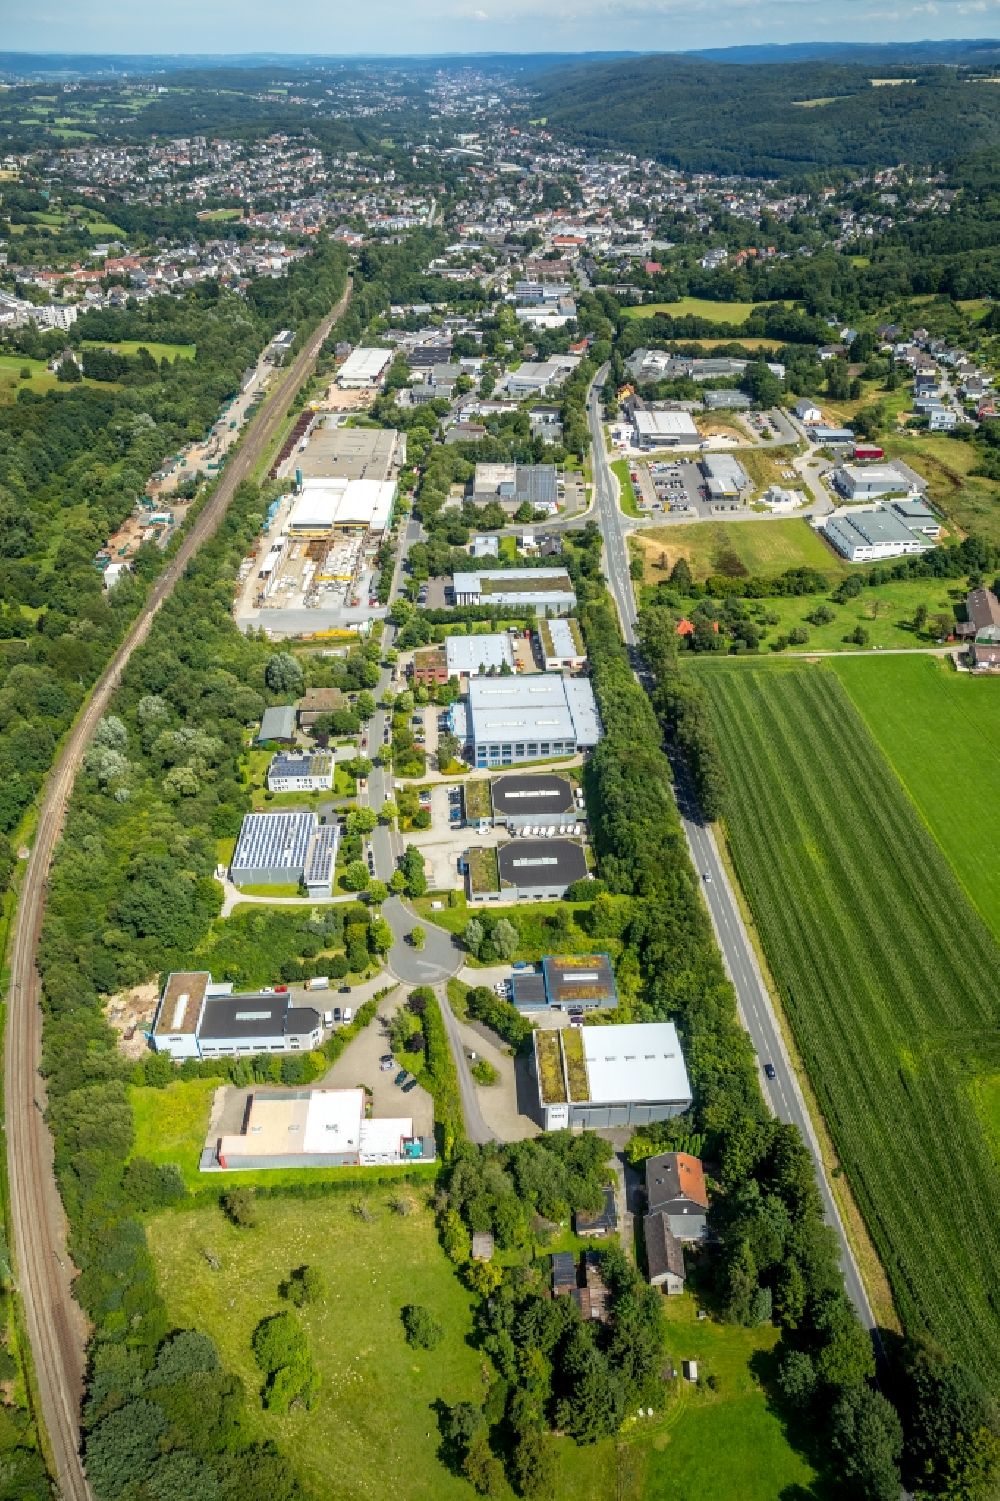 Aerial image Gevelsberg - Industrial and commercial area along the Rosendahler Strasse - Gewerbestrasse in Gevelsberg in the state North Rhine-Westphalia, Germany